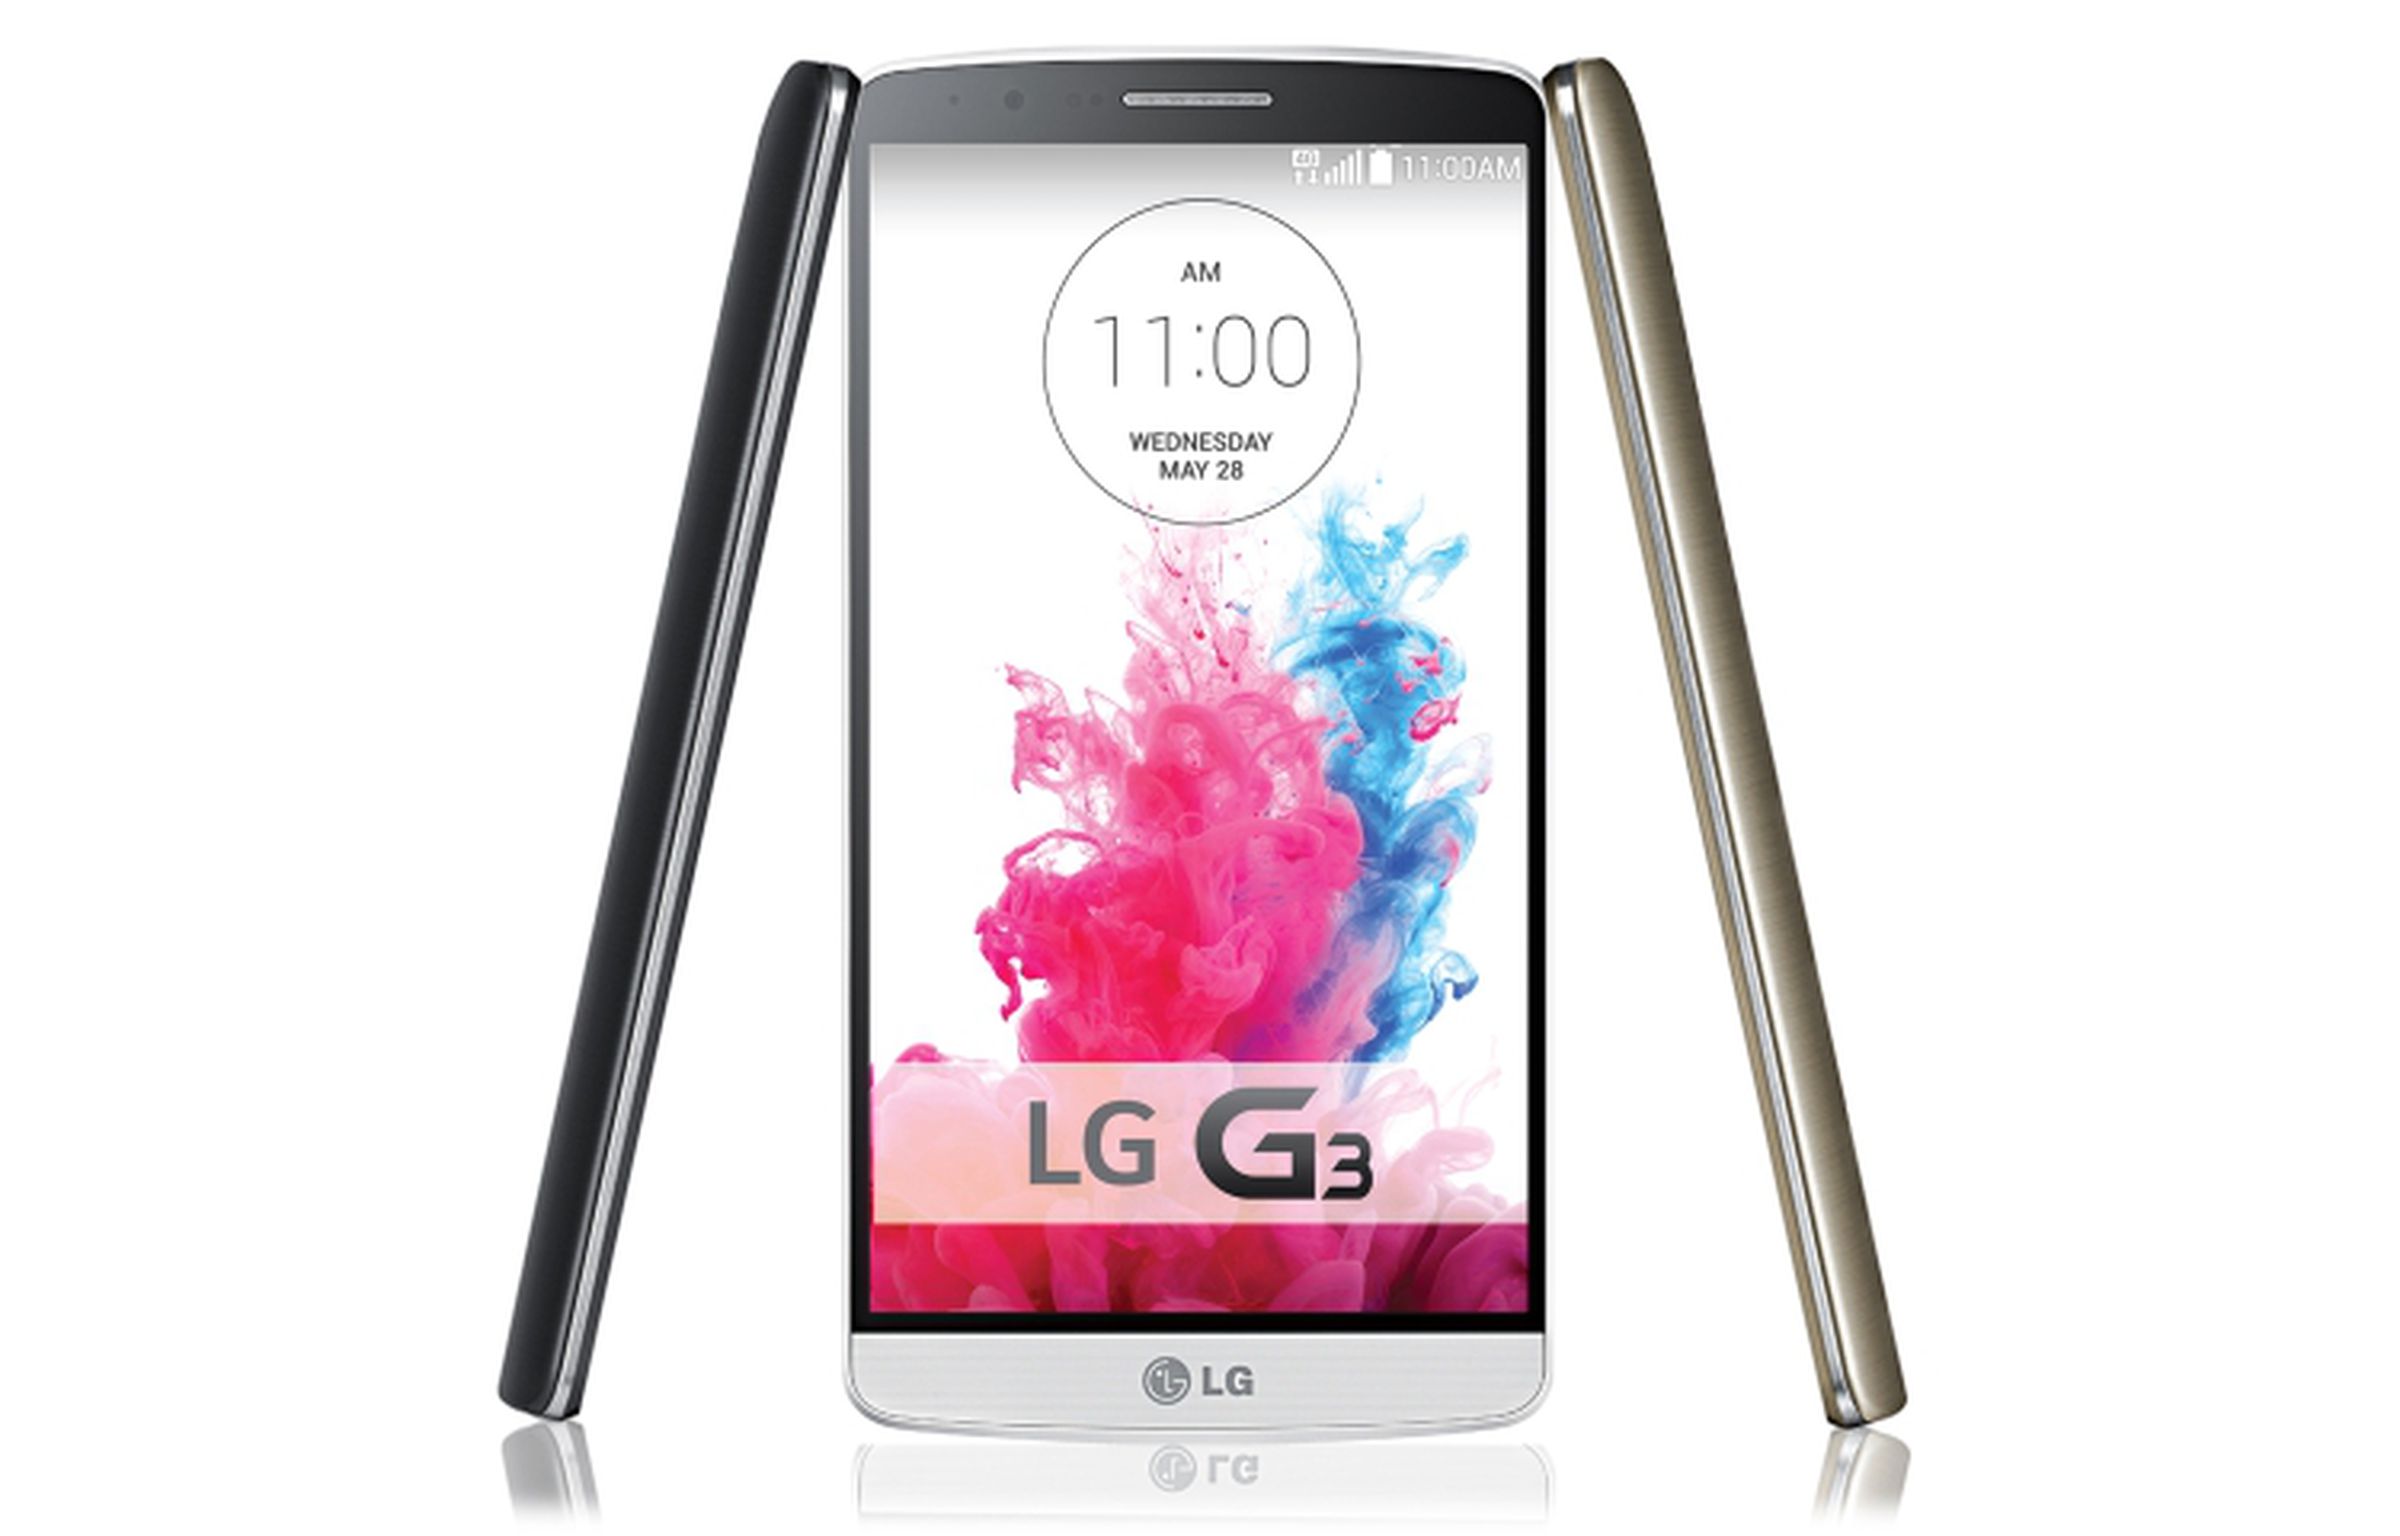 LG G3 leaked product shots